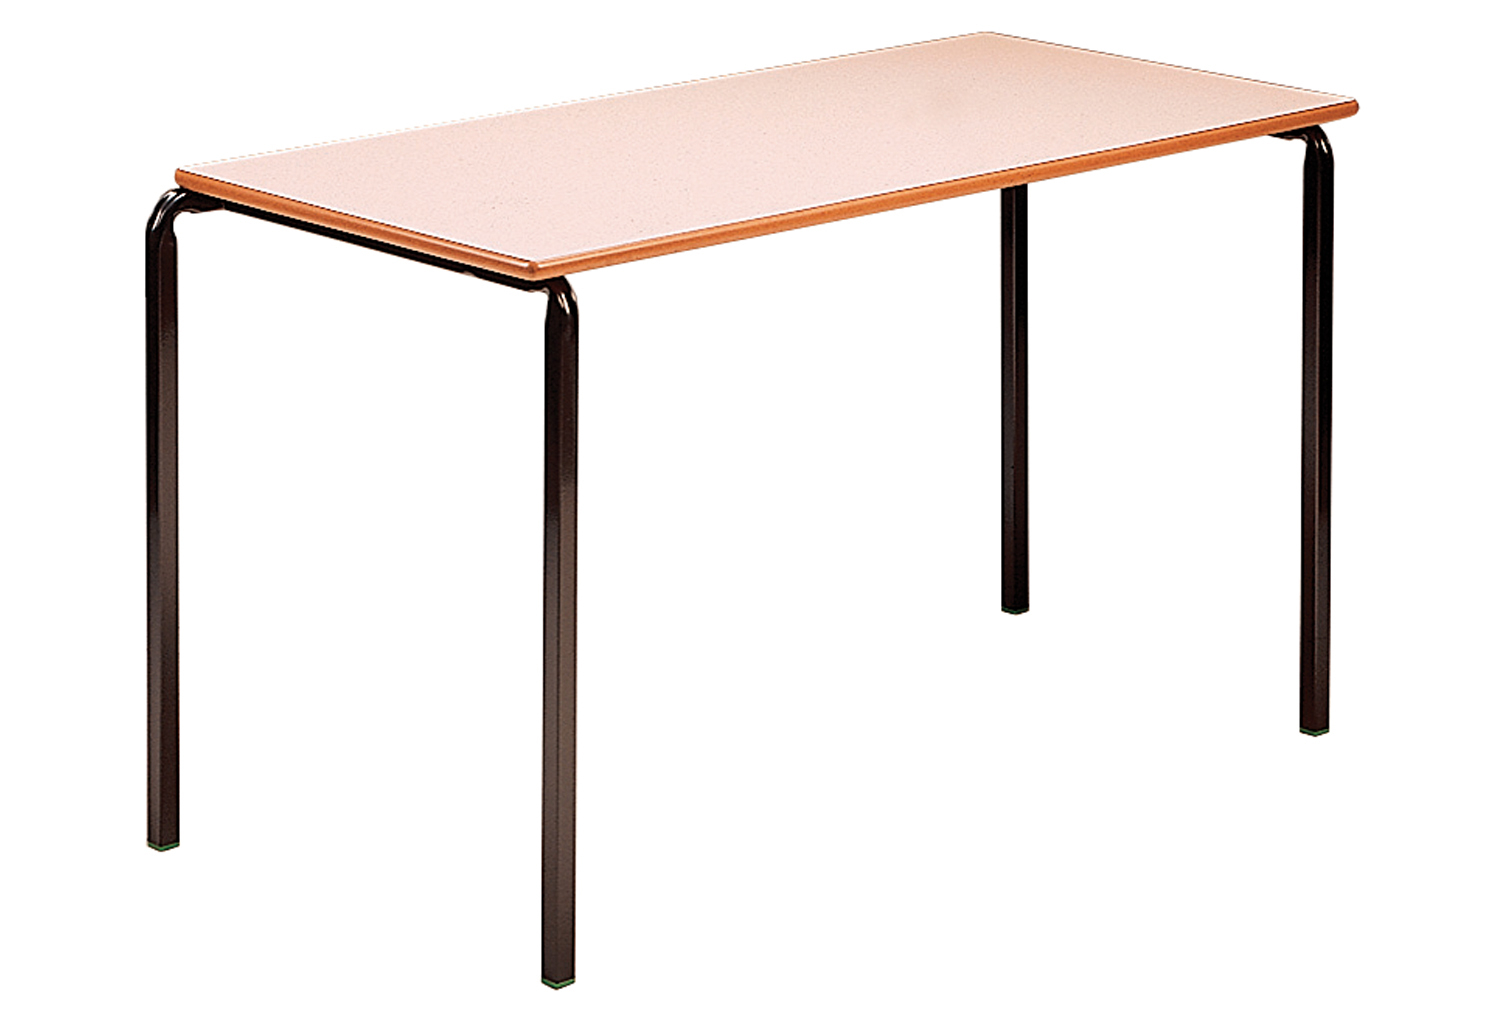 Qty 4 - Rectangular Crush Bent Classroom Tables 14+ Years, 120wx75dx76h (cm), Black Frame, Beech Top, MDF Beech Edge